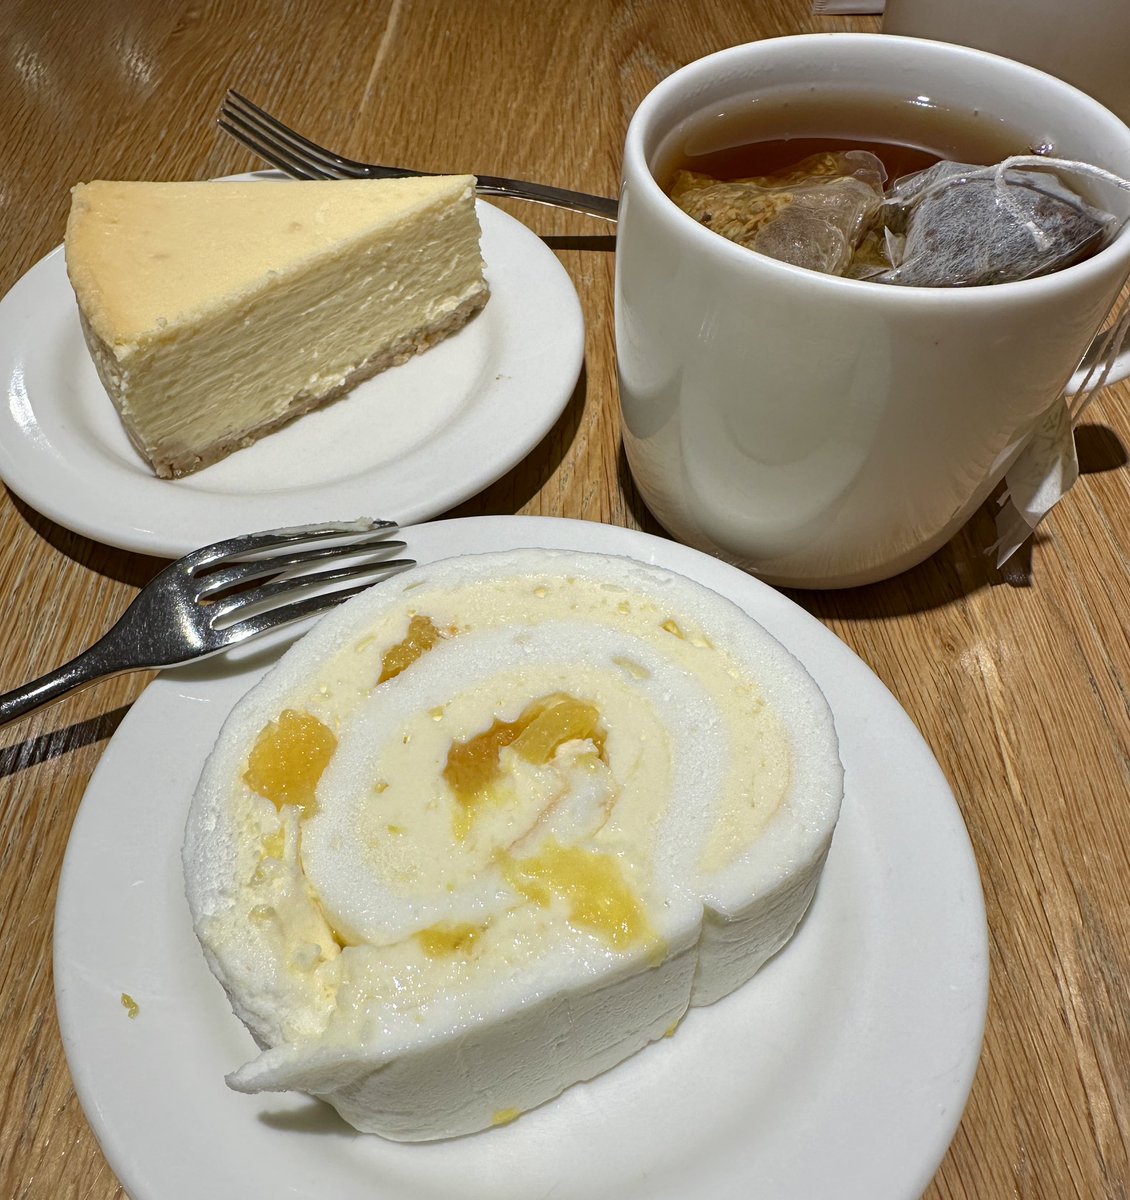 😋😋 #icecream #hongkong #mujicafe #cafe @muji_net @mujiusa #cakes #food #eat #hk #dinner #dessert